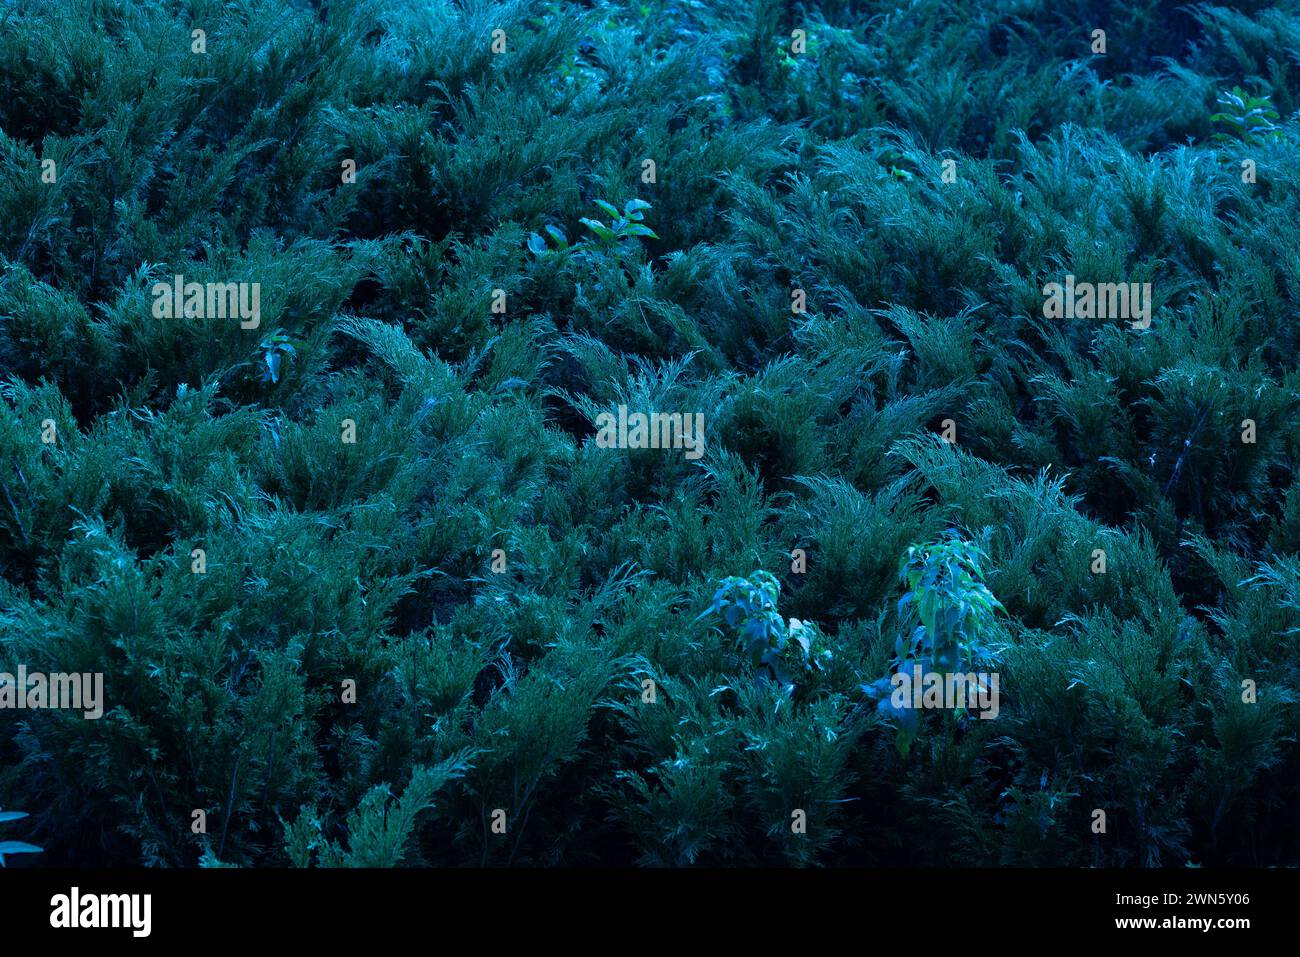 Juniper hedge texture in dark green tones, close up Stock Photo